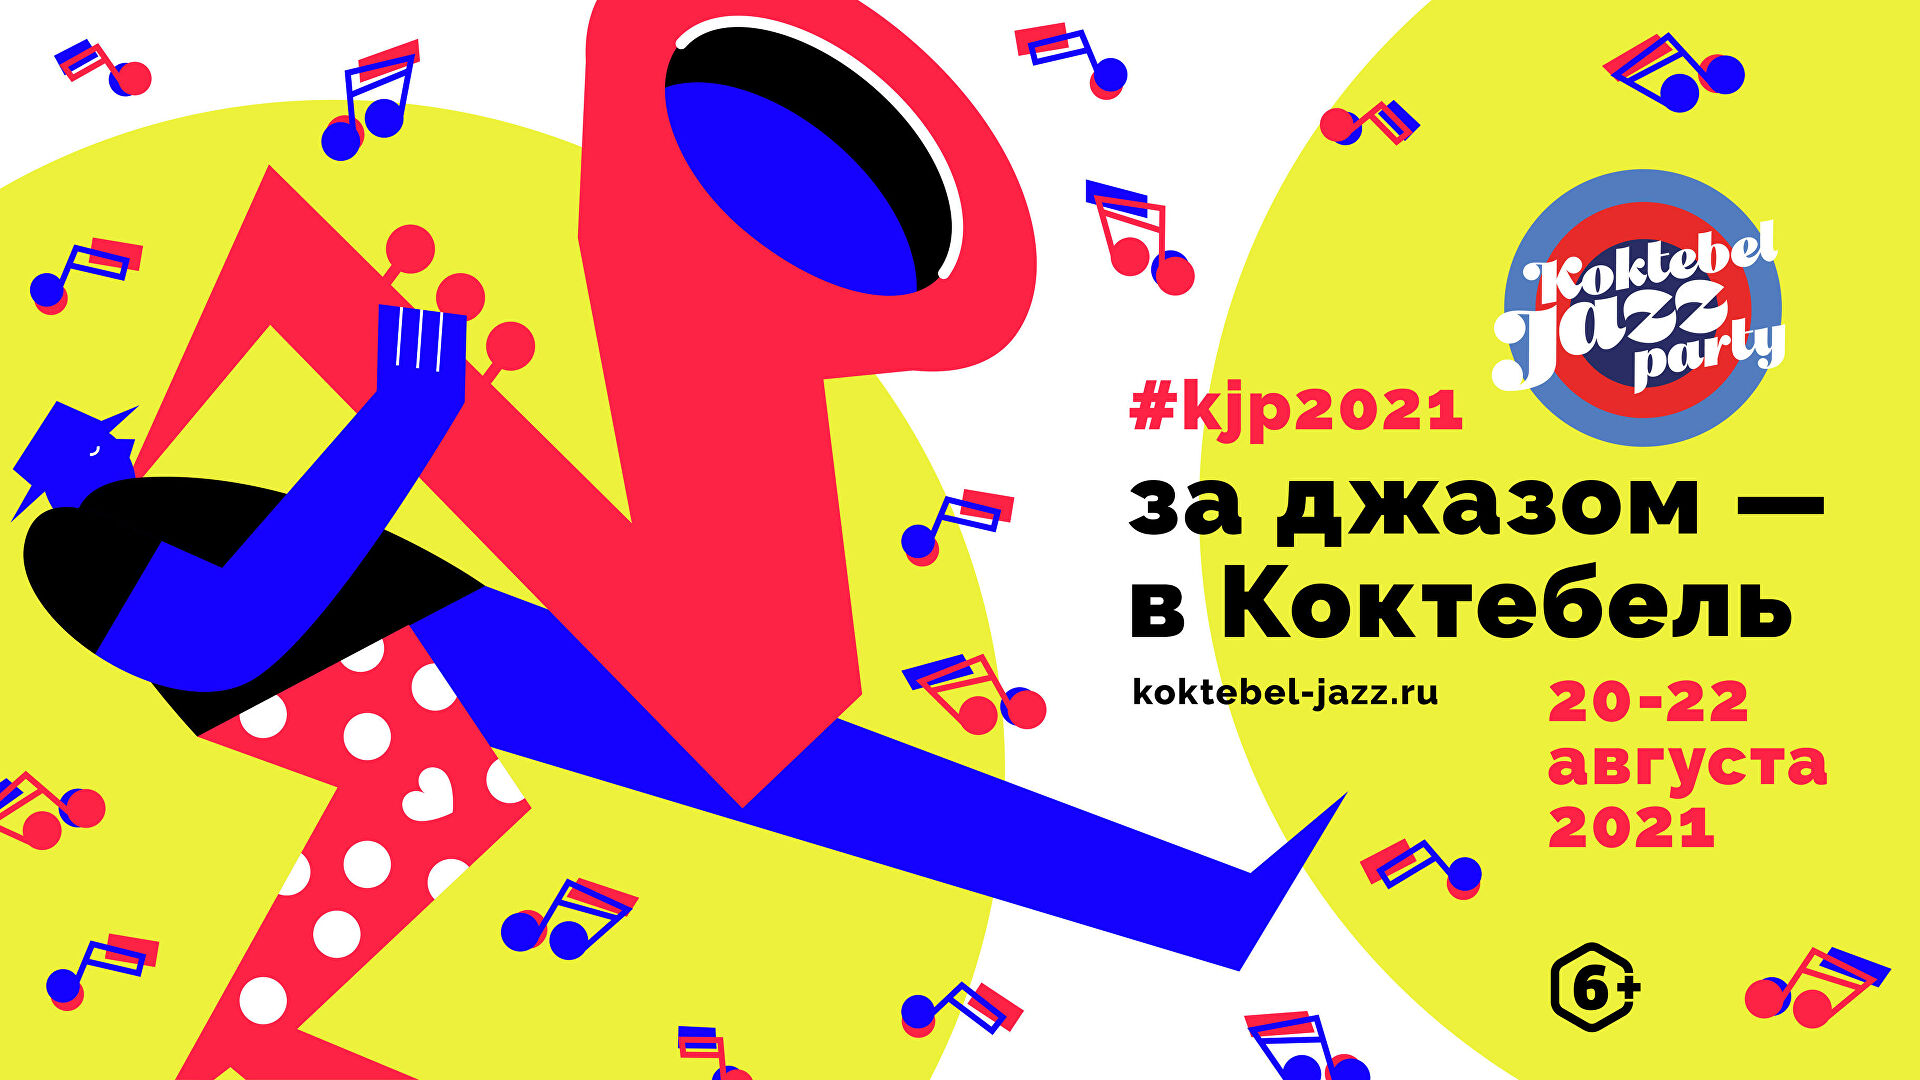 Koktebel Jazz Party-2021   